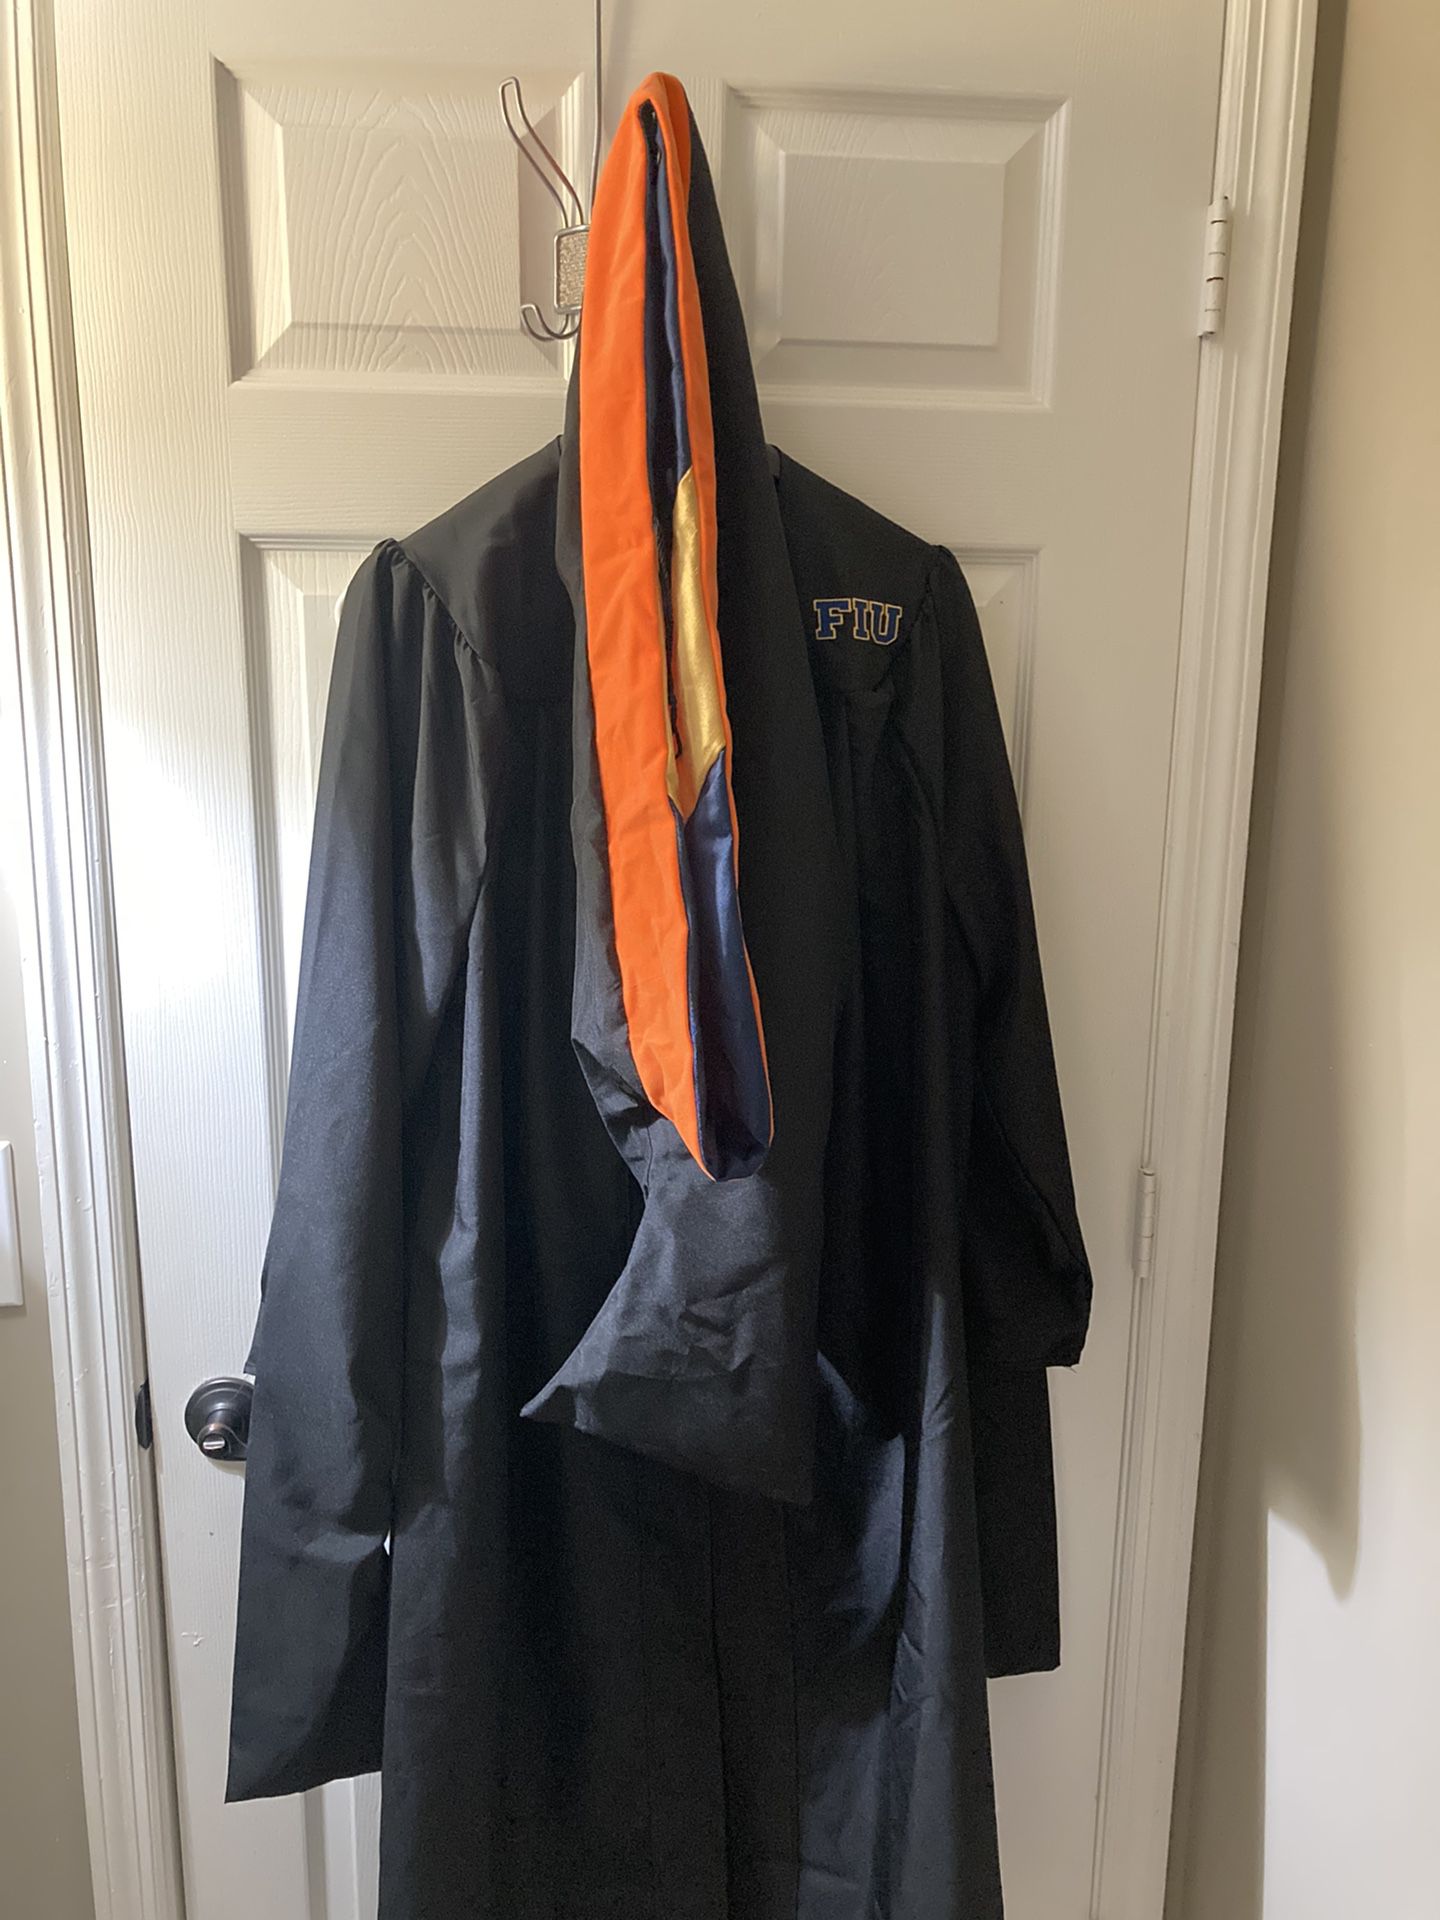 FIU Graduation Regalia Cap And gown